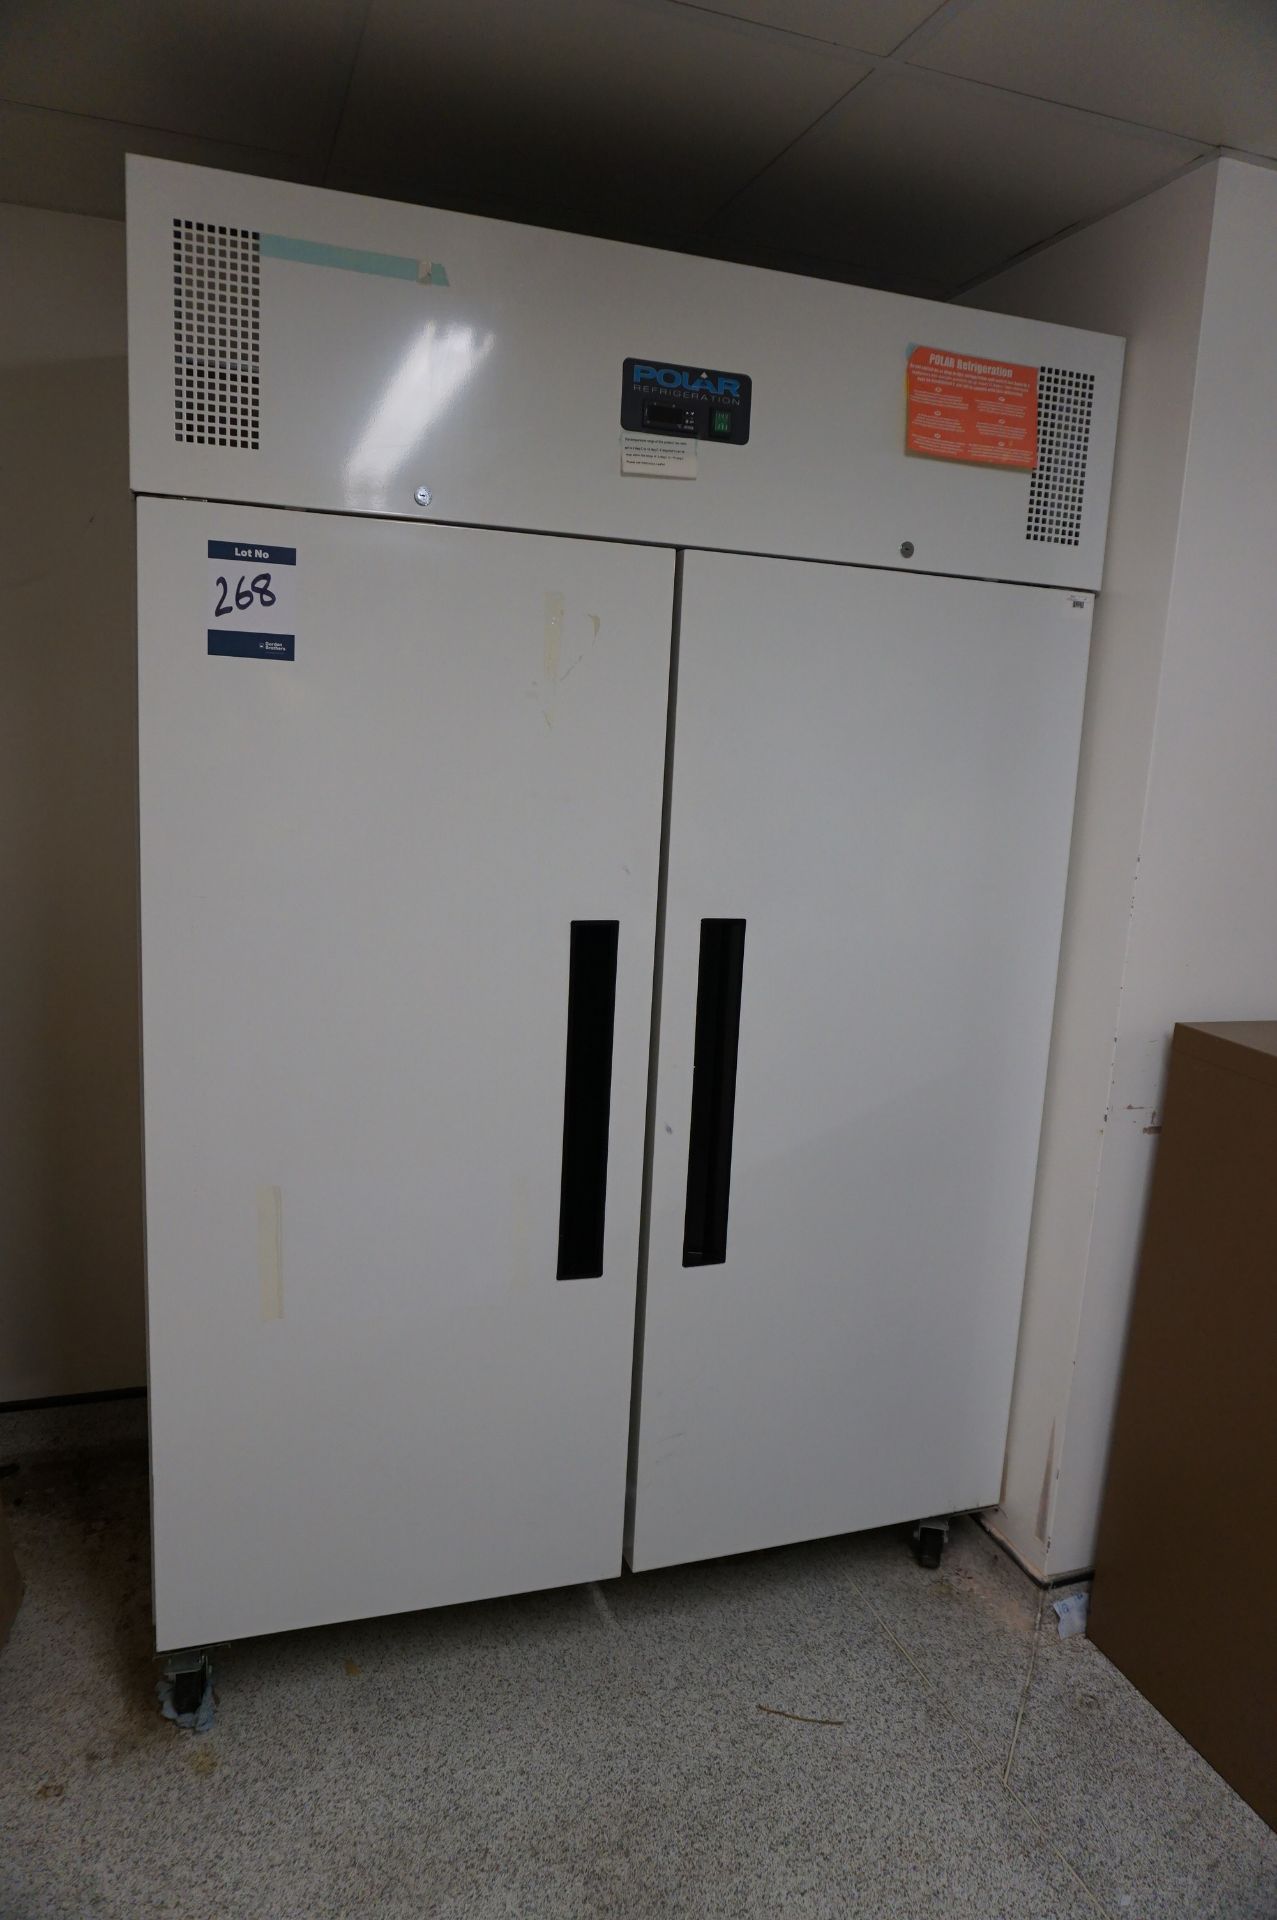 Polar, Model: CC663, mobile double door refrigerator, Serial No. 165012, 2m (h) x 1.32, (w) x 0.